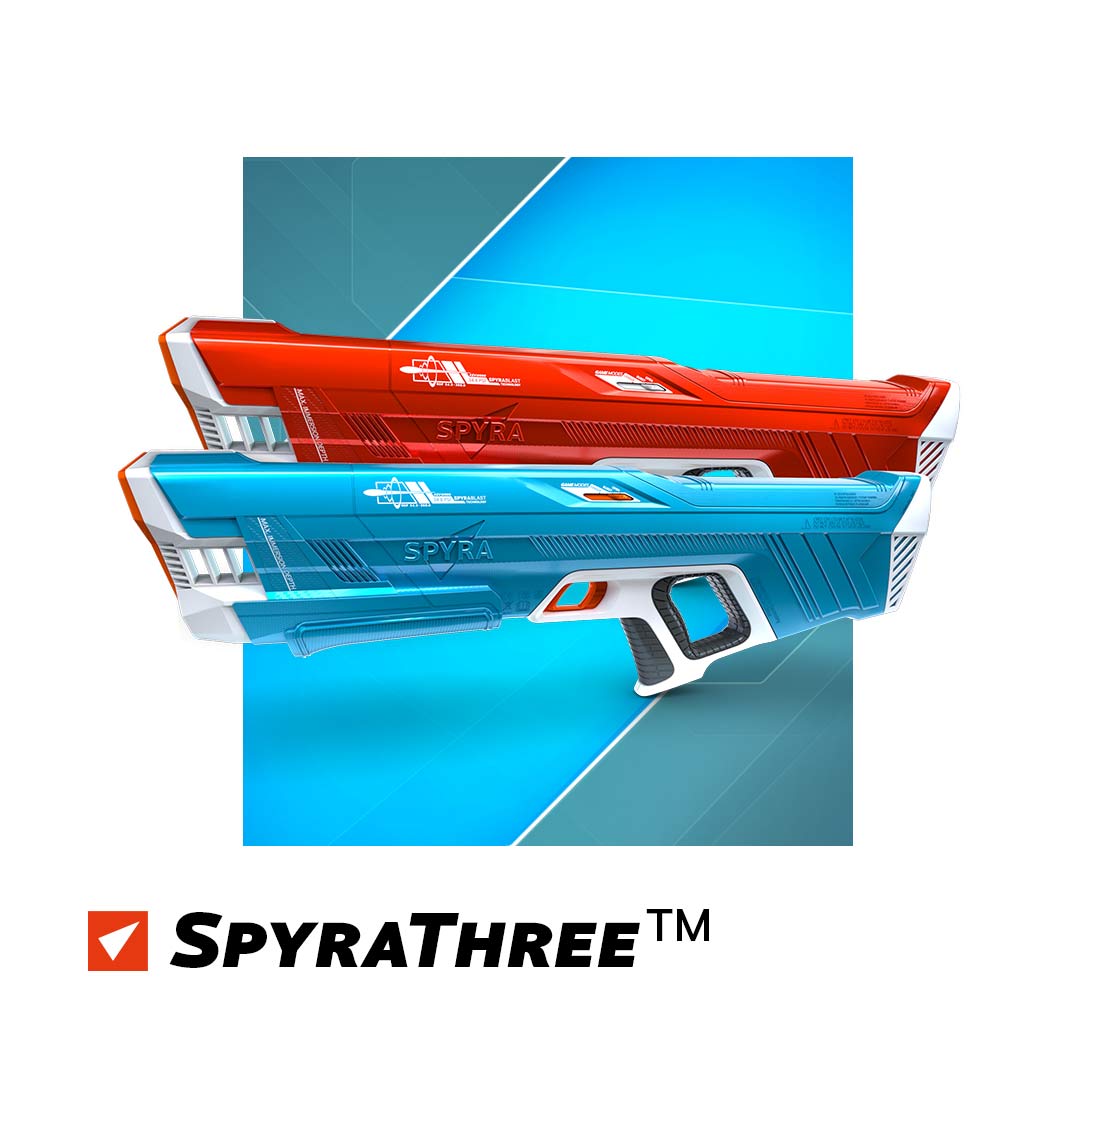 REVIEW: Spyra Two 